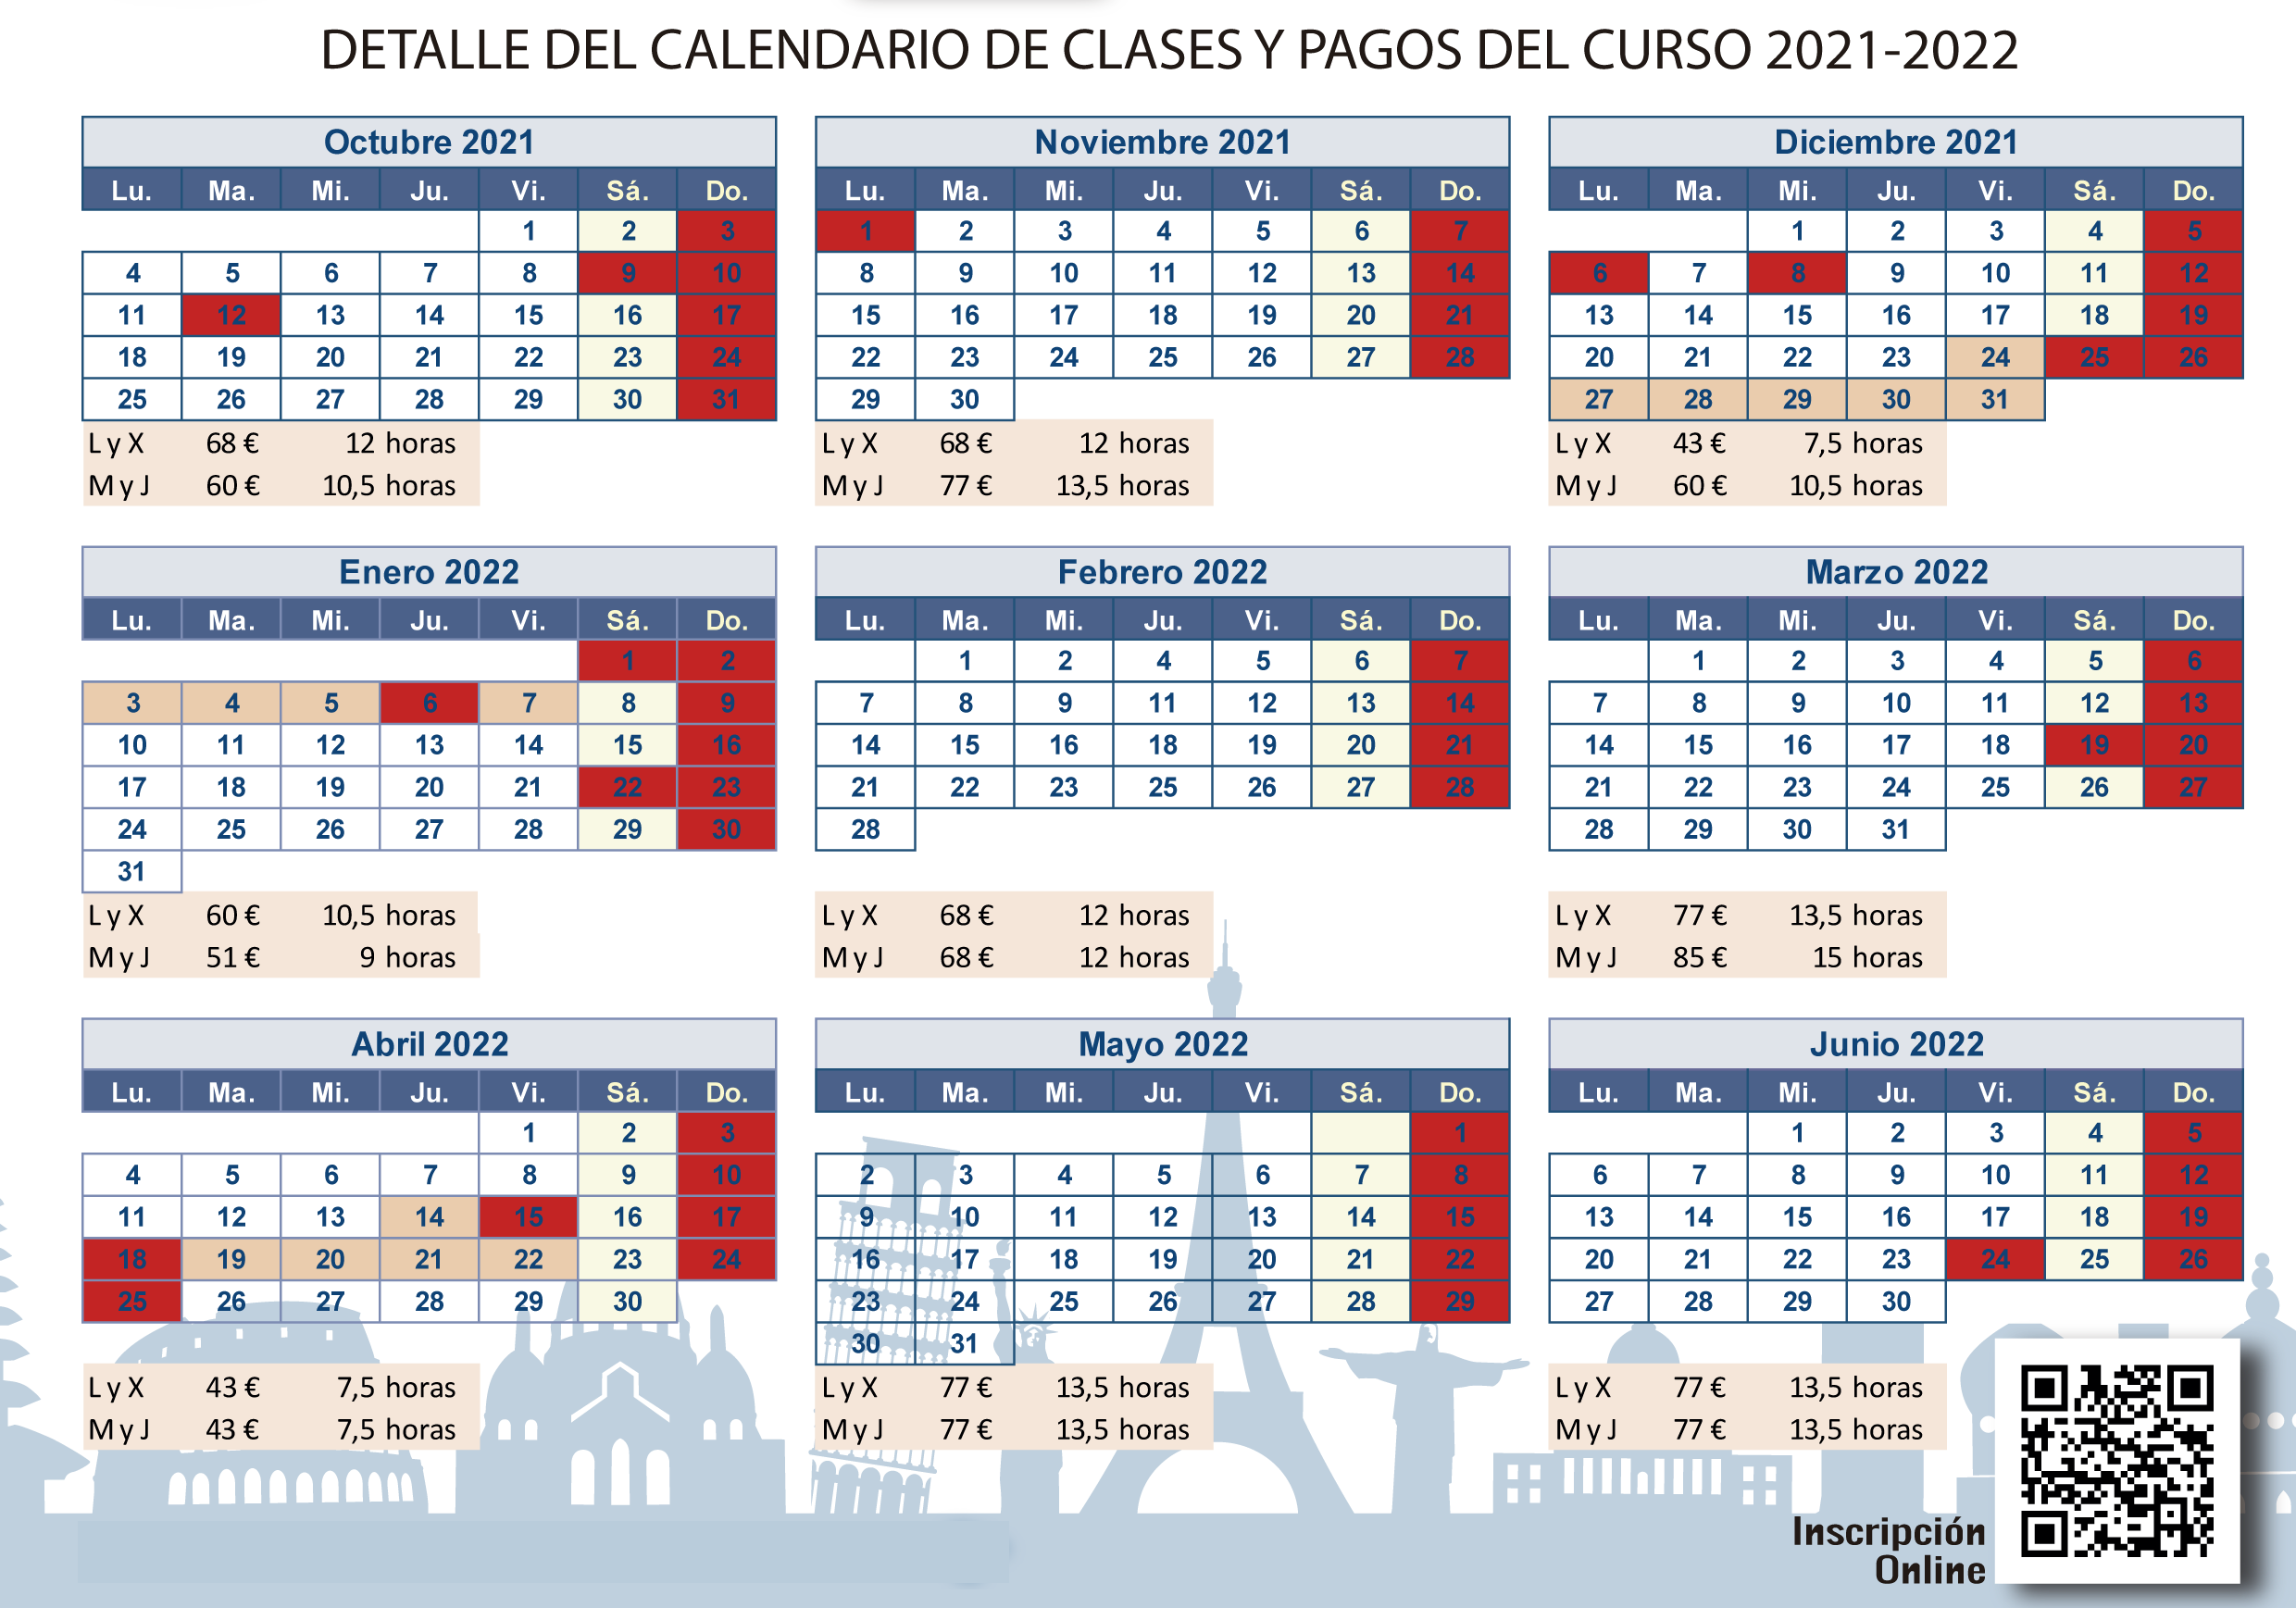 calendarios de clases de ingles por meses del curso 2021 - 22